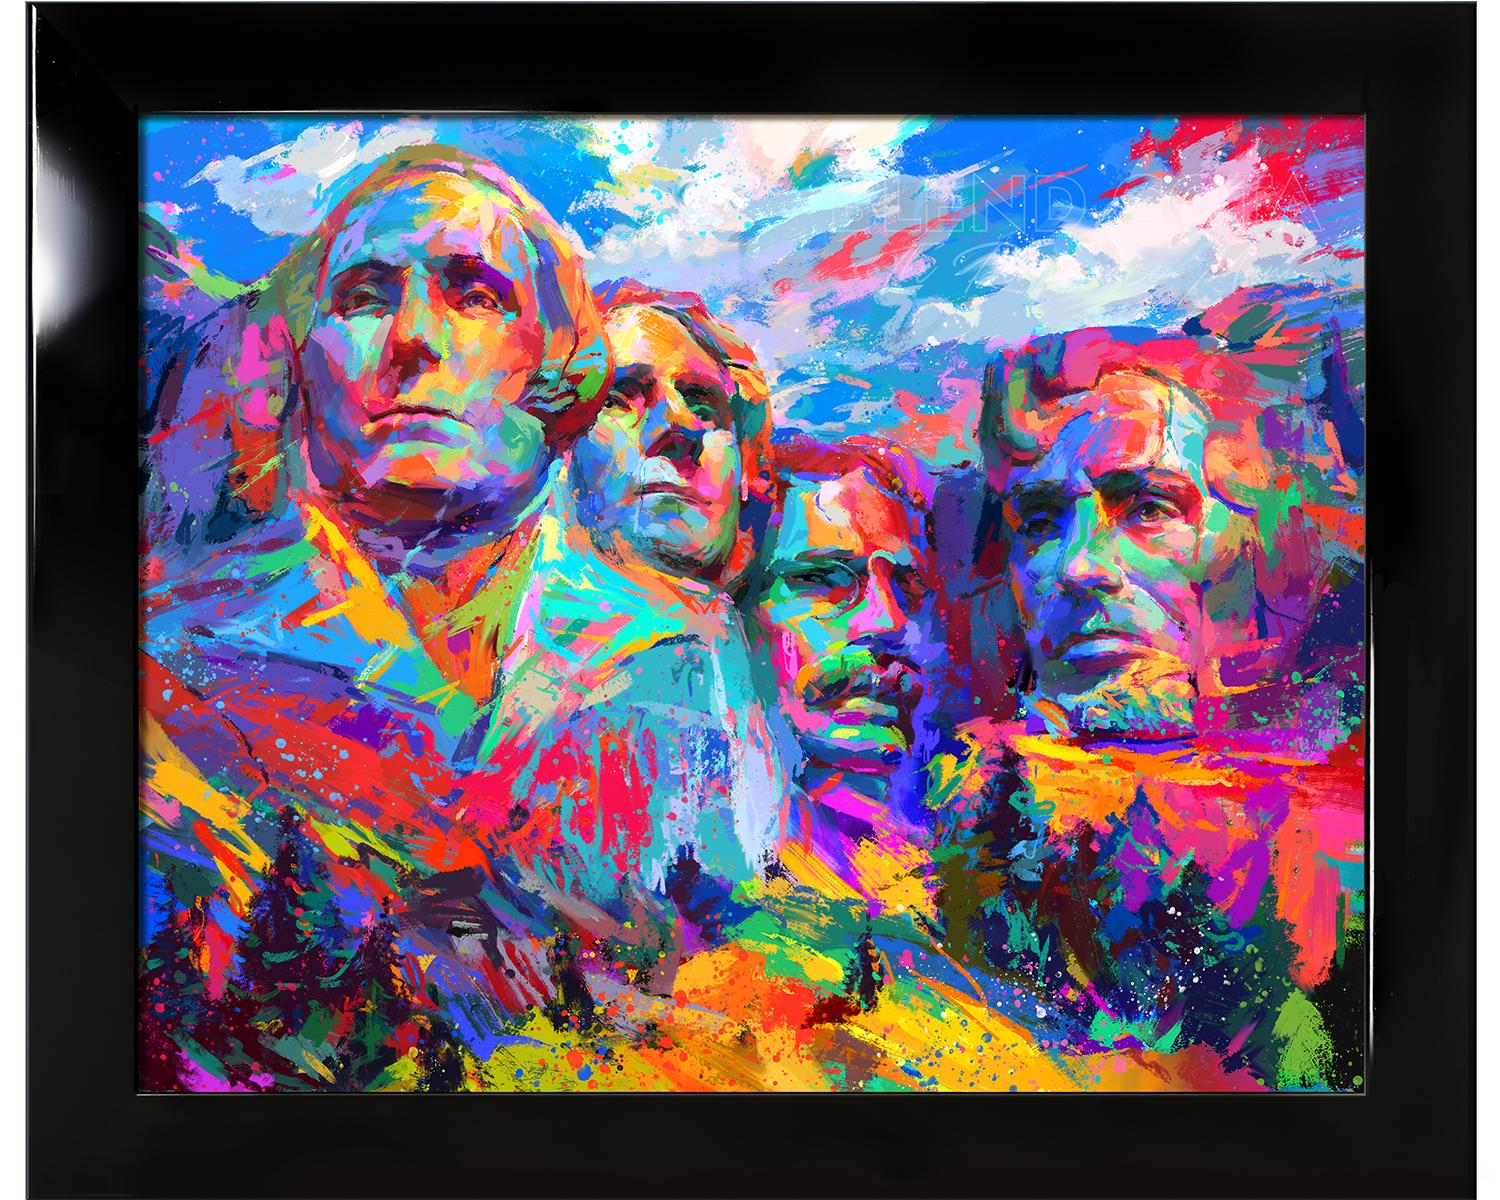 Mount Rushmore - Gemälde in Öl auf Leinwand